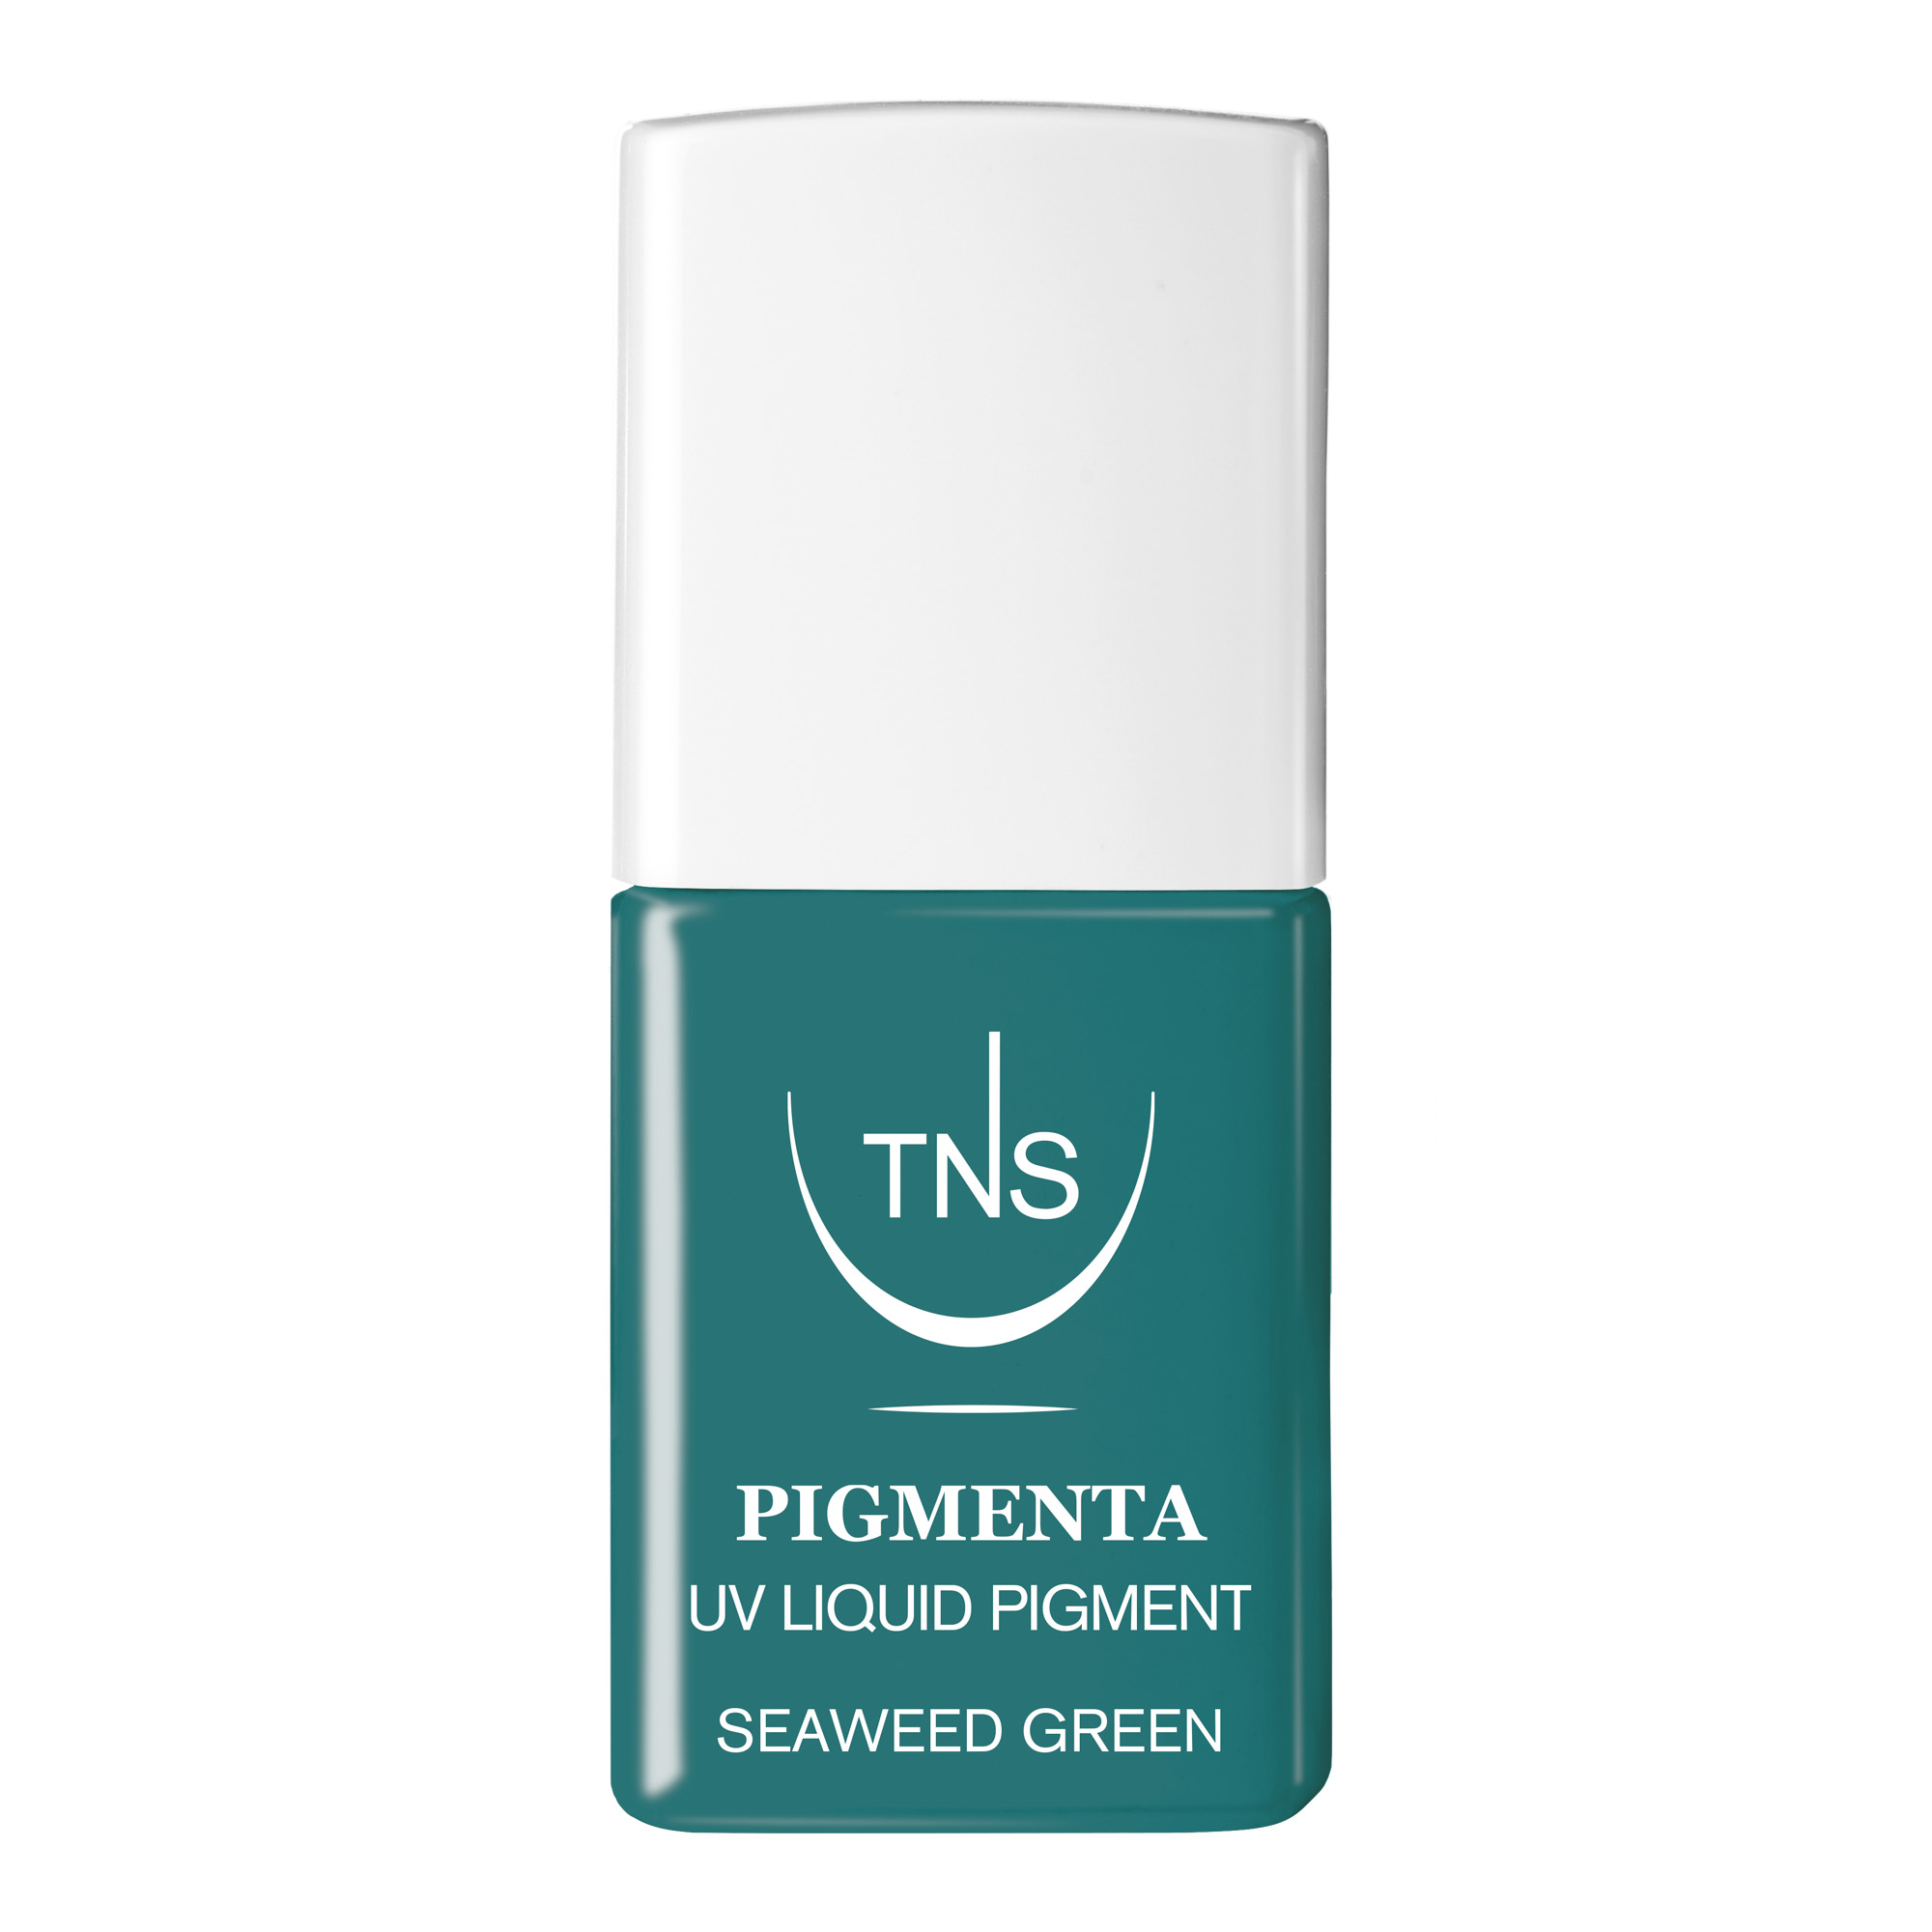 Pigment liquide UV Seaweed Green vert émeraude foncé 10 ml Pigmenta TNS